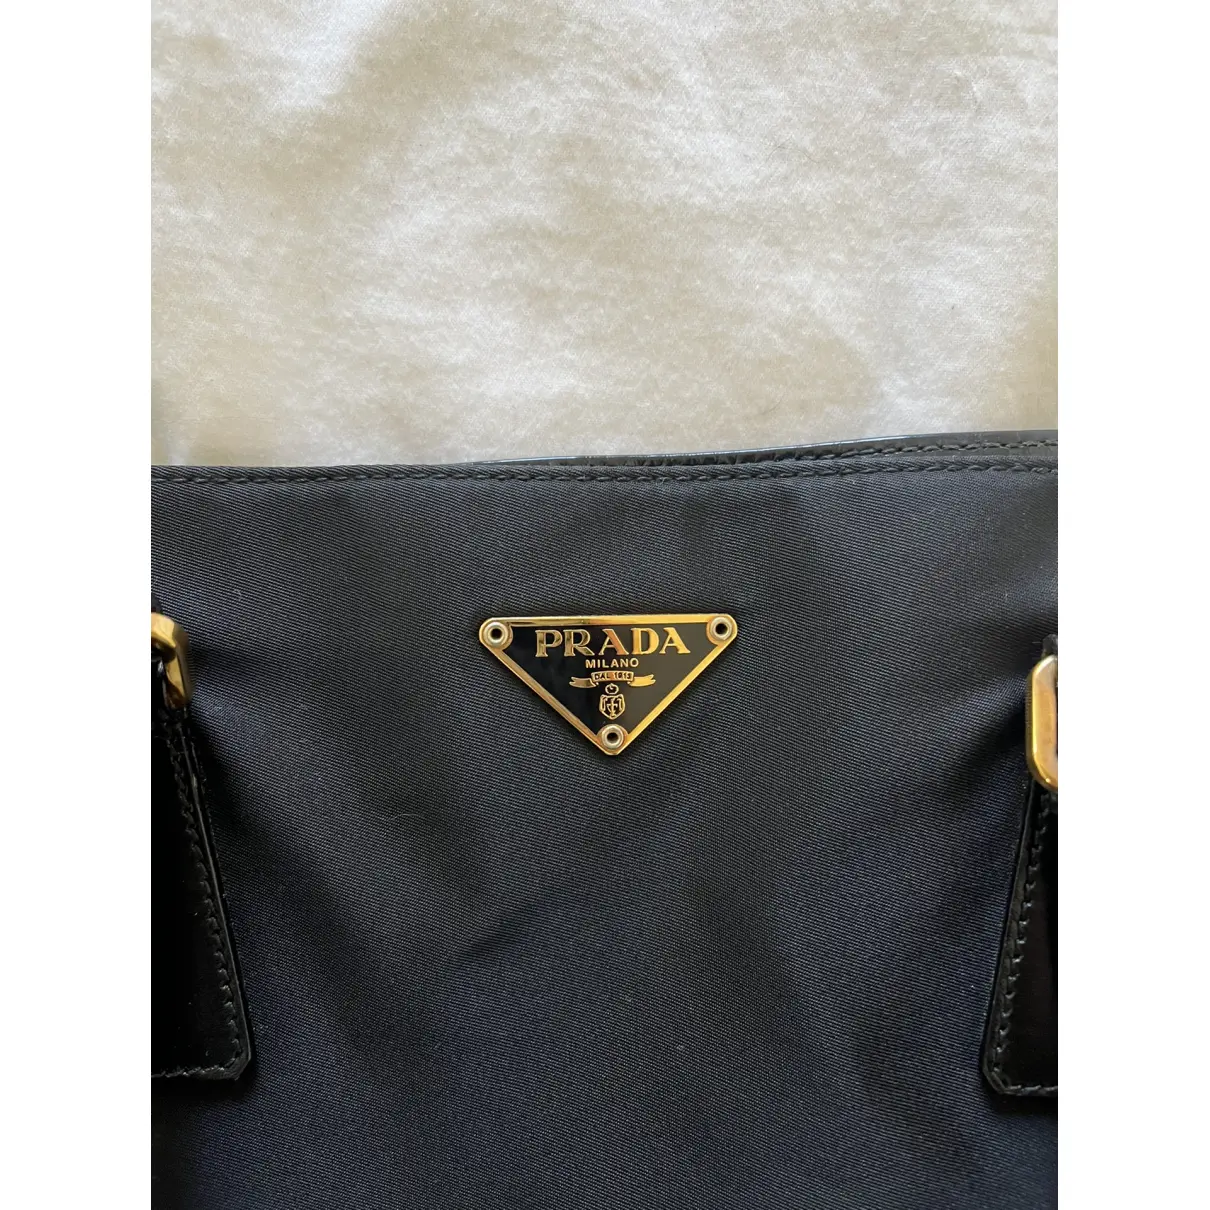 Buy Prada Cloth handbag online